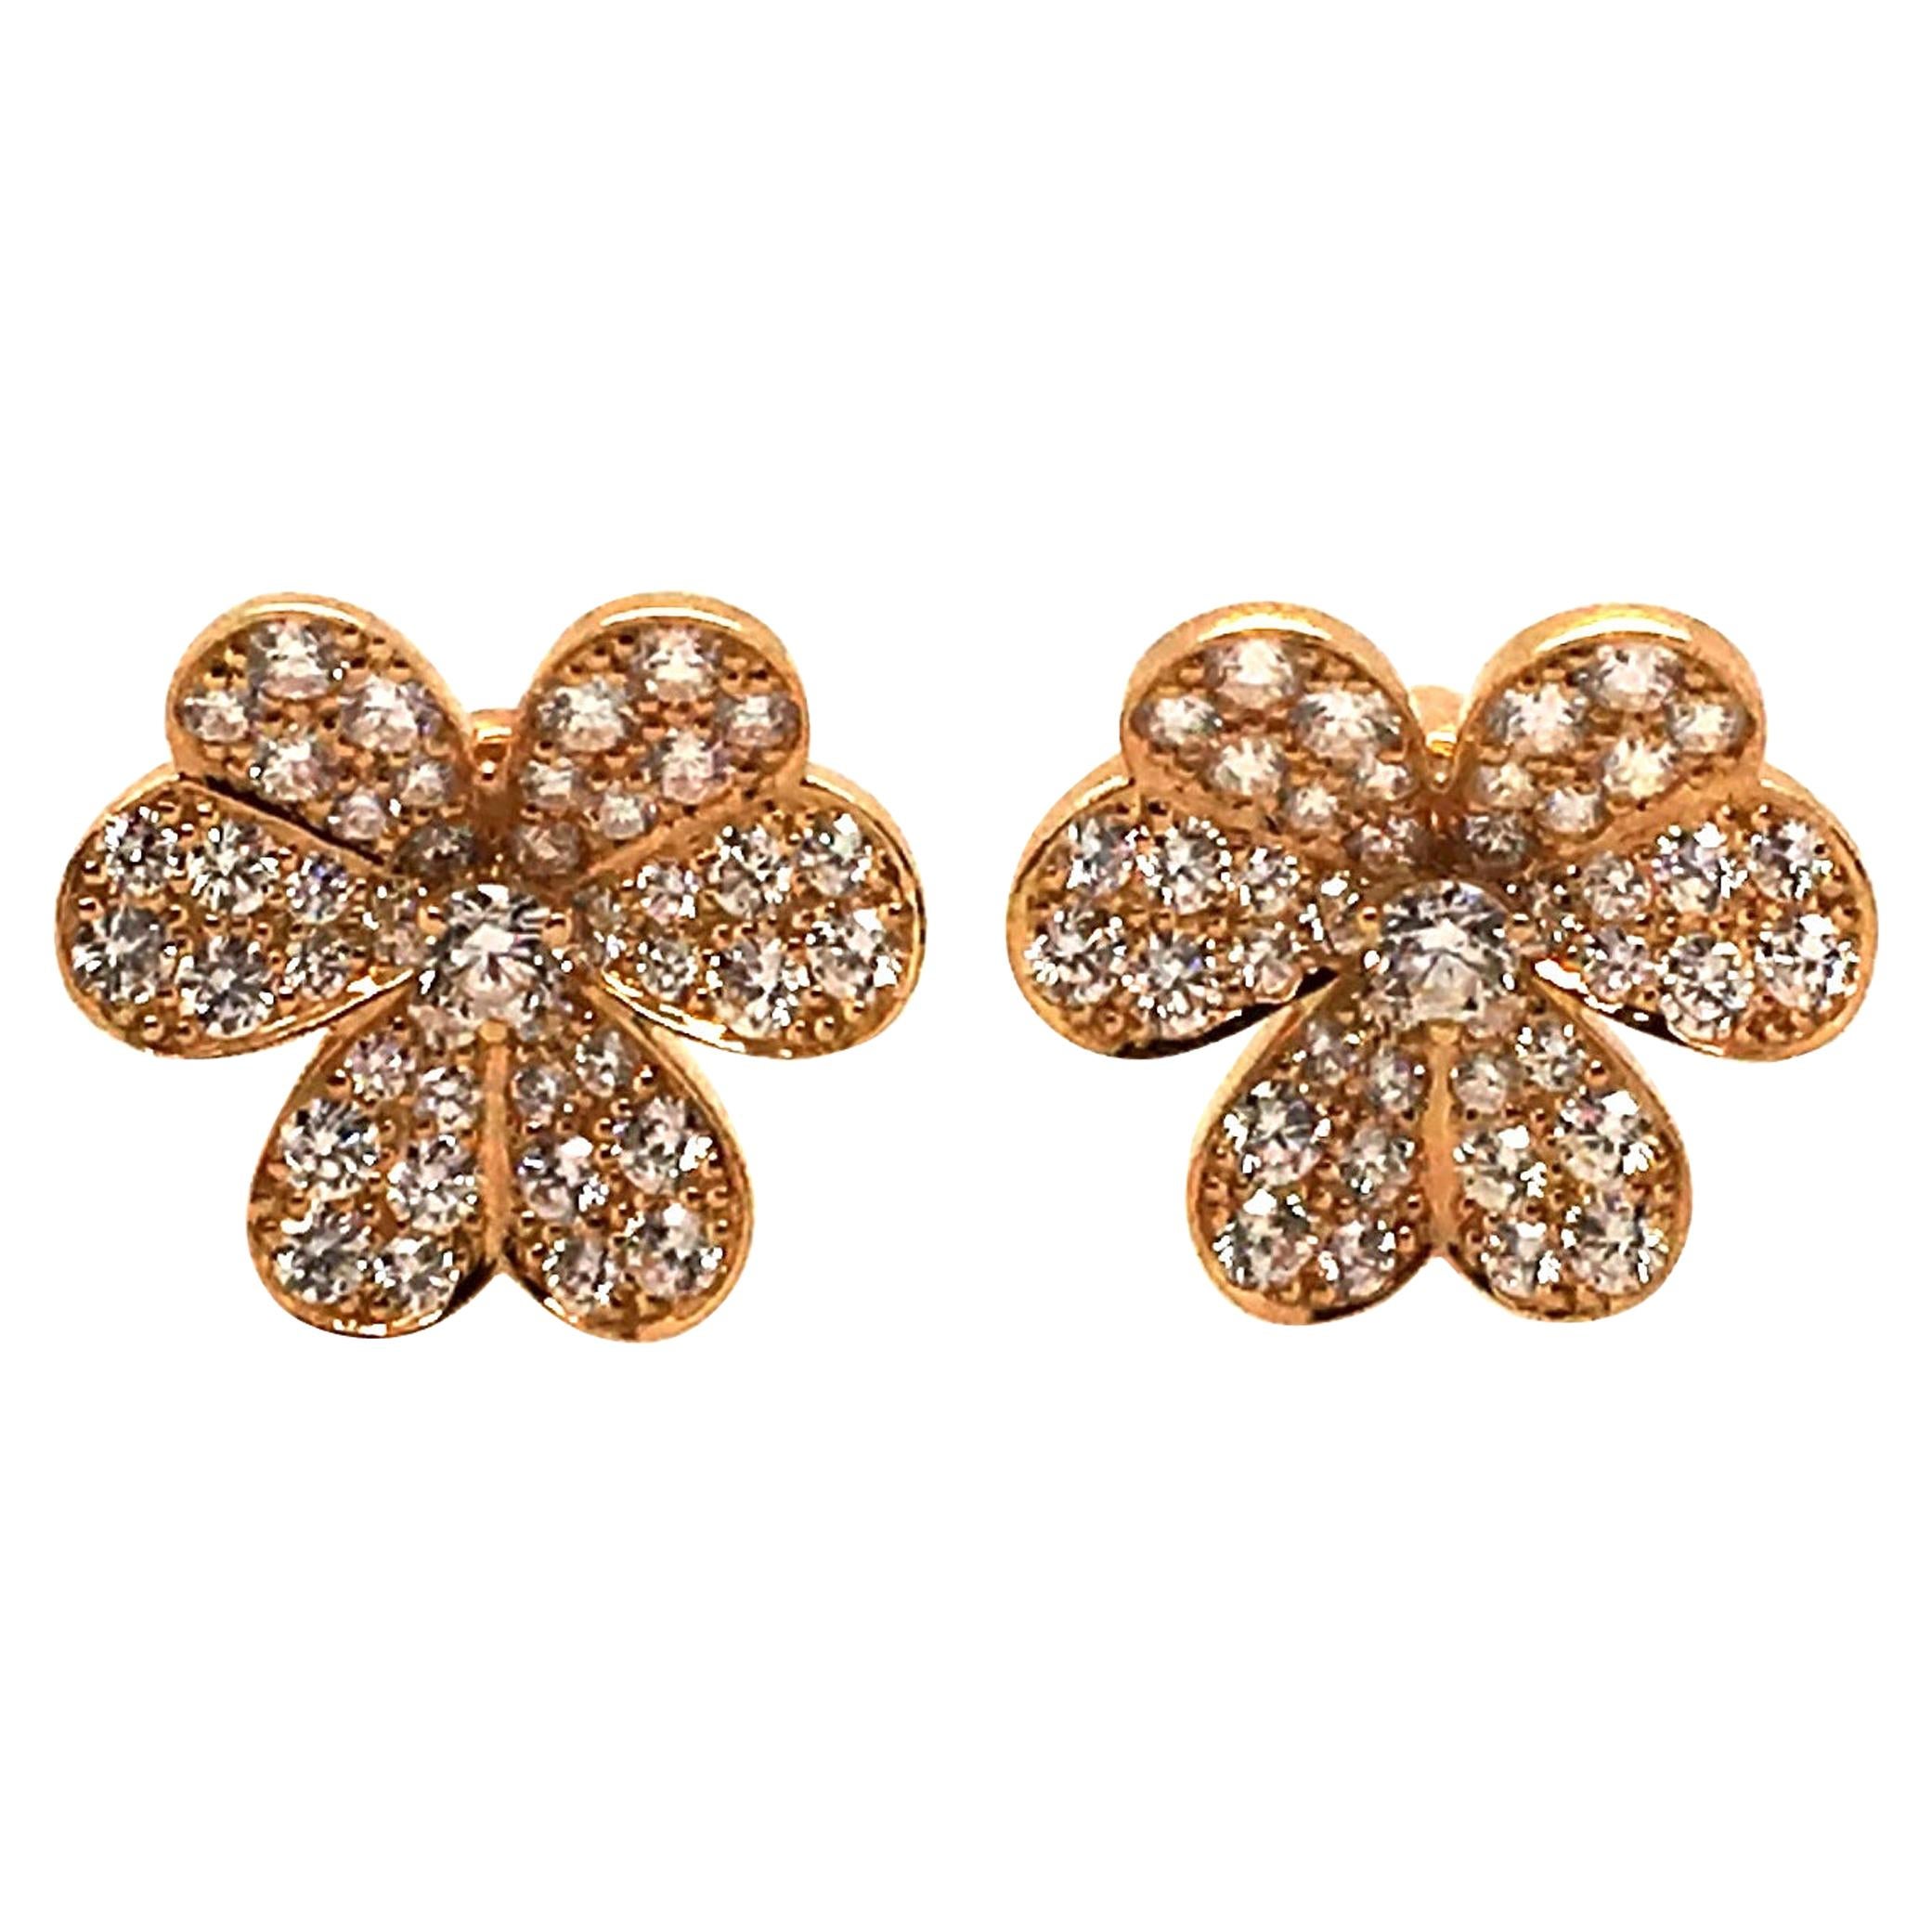 Van Cleef & Arpels Gold and Diamond Frivole Earrings